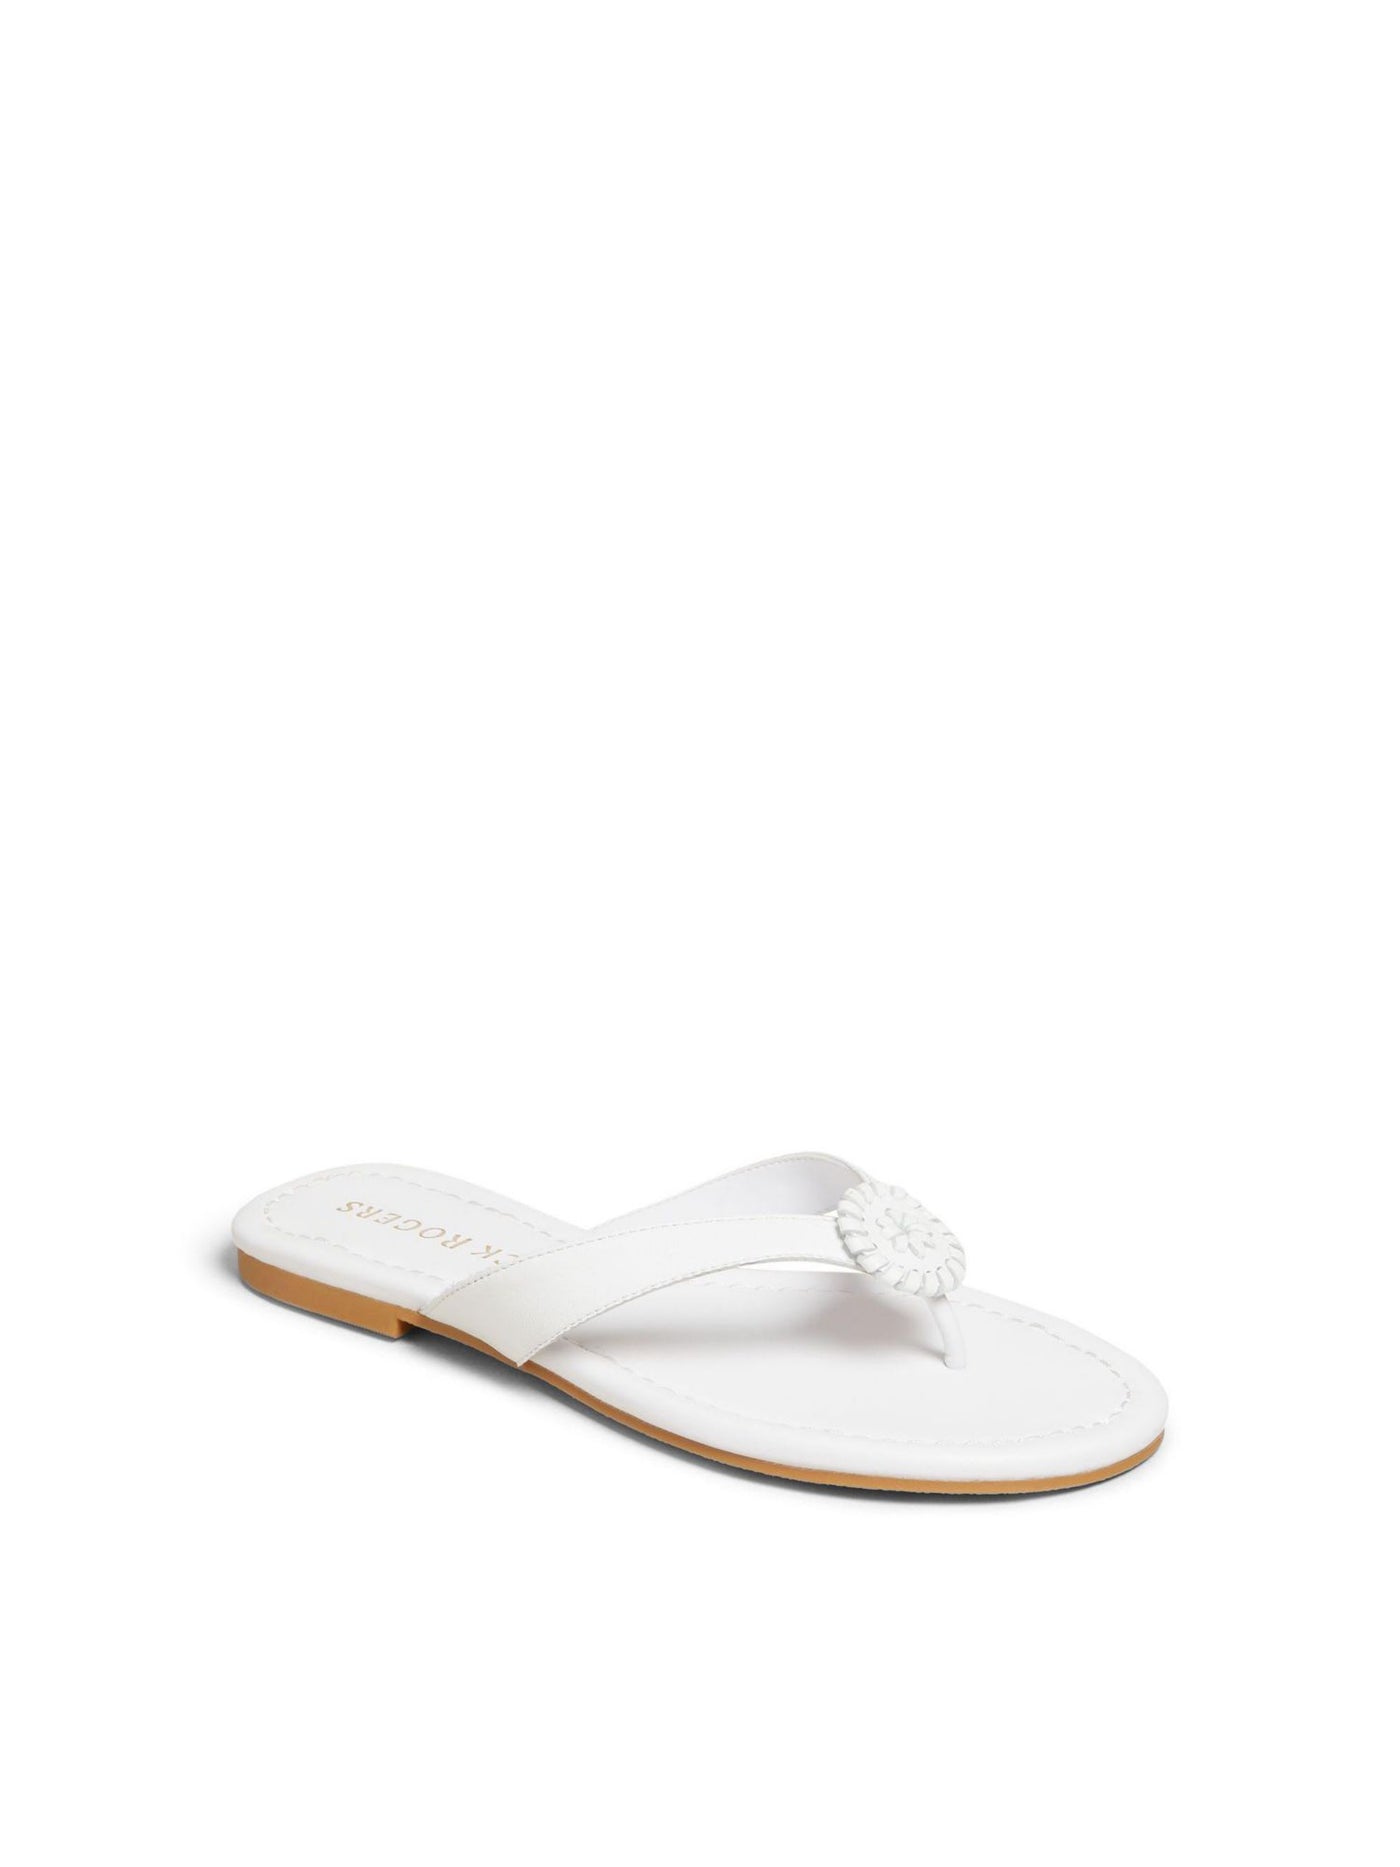 JACK ROGERS Womens White Woven Detail Comfort Rowan Round Toe Slip On Flip Flop Sandal 5 M